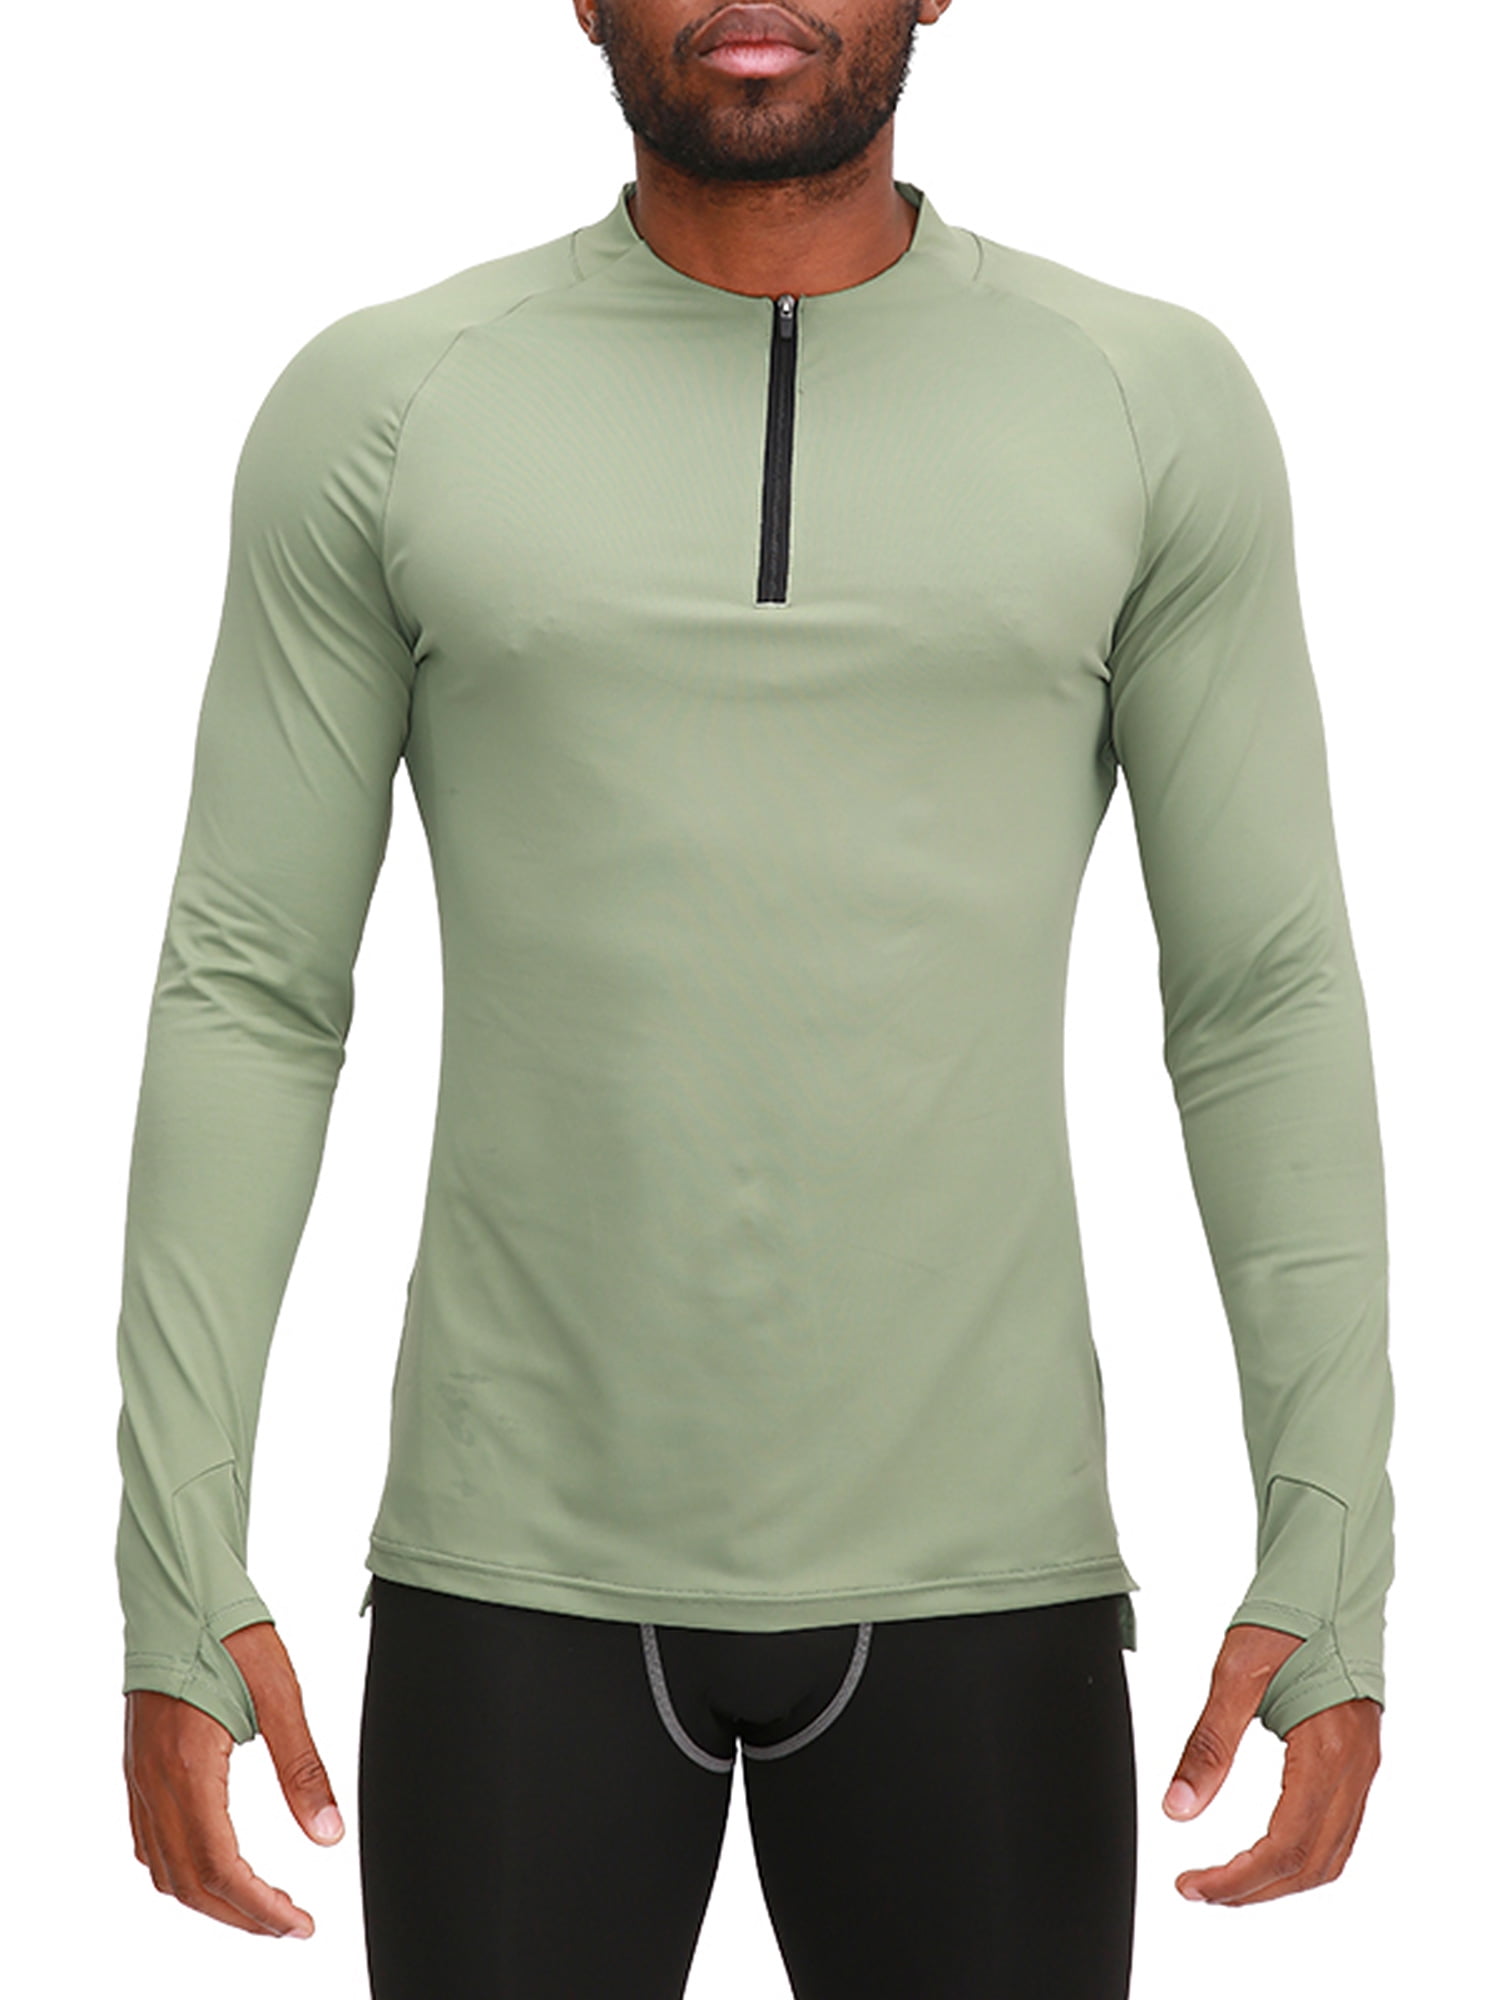 Mens Compression Shirt 1/4 Zipper Mock Neck Top Workout Athletic Gym Long Sleeve 